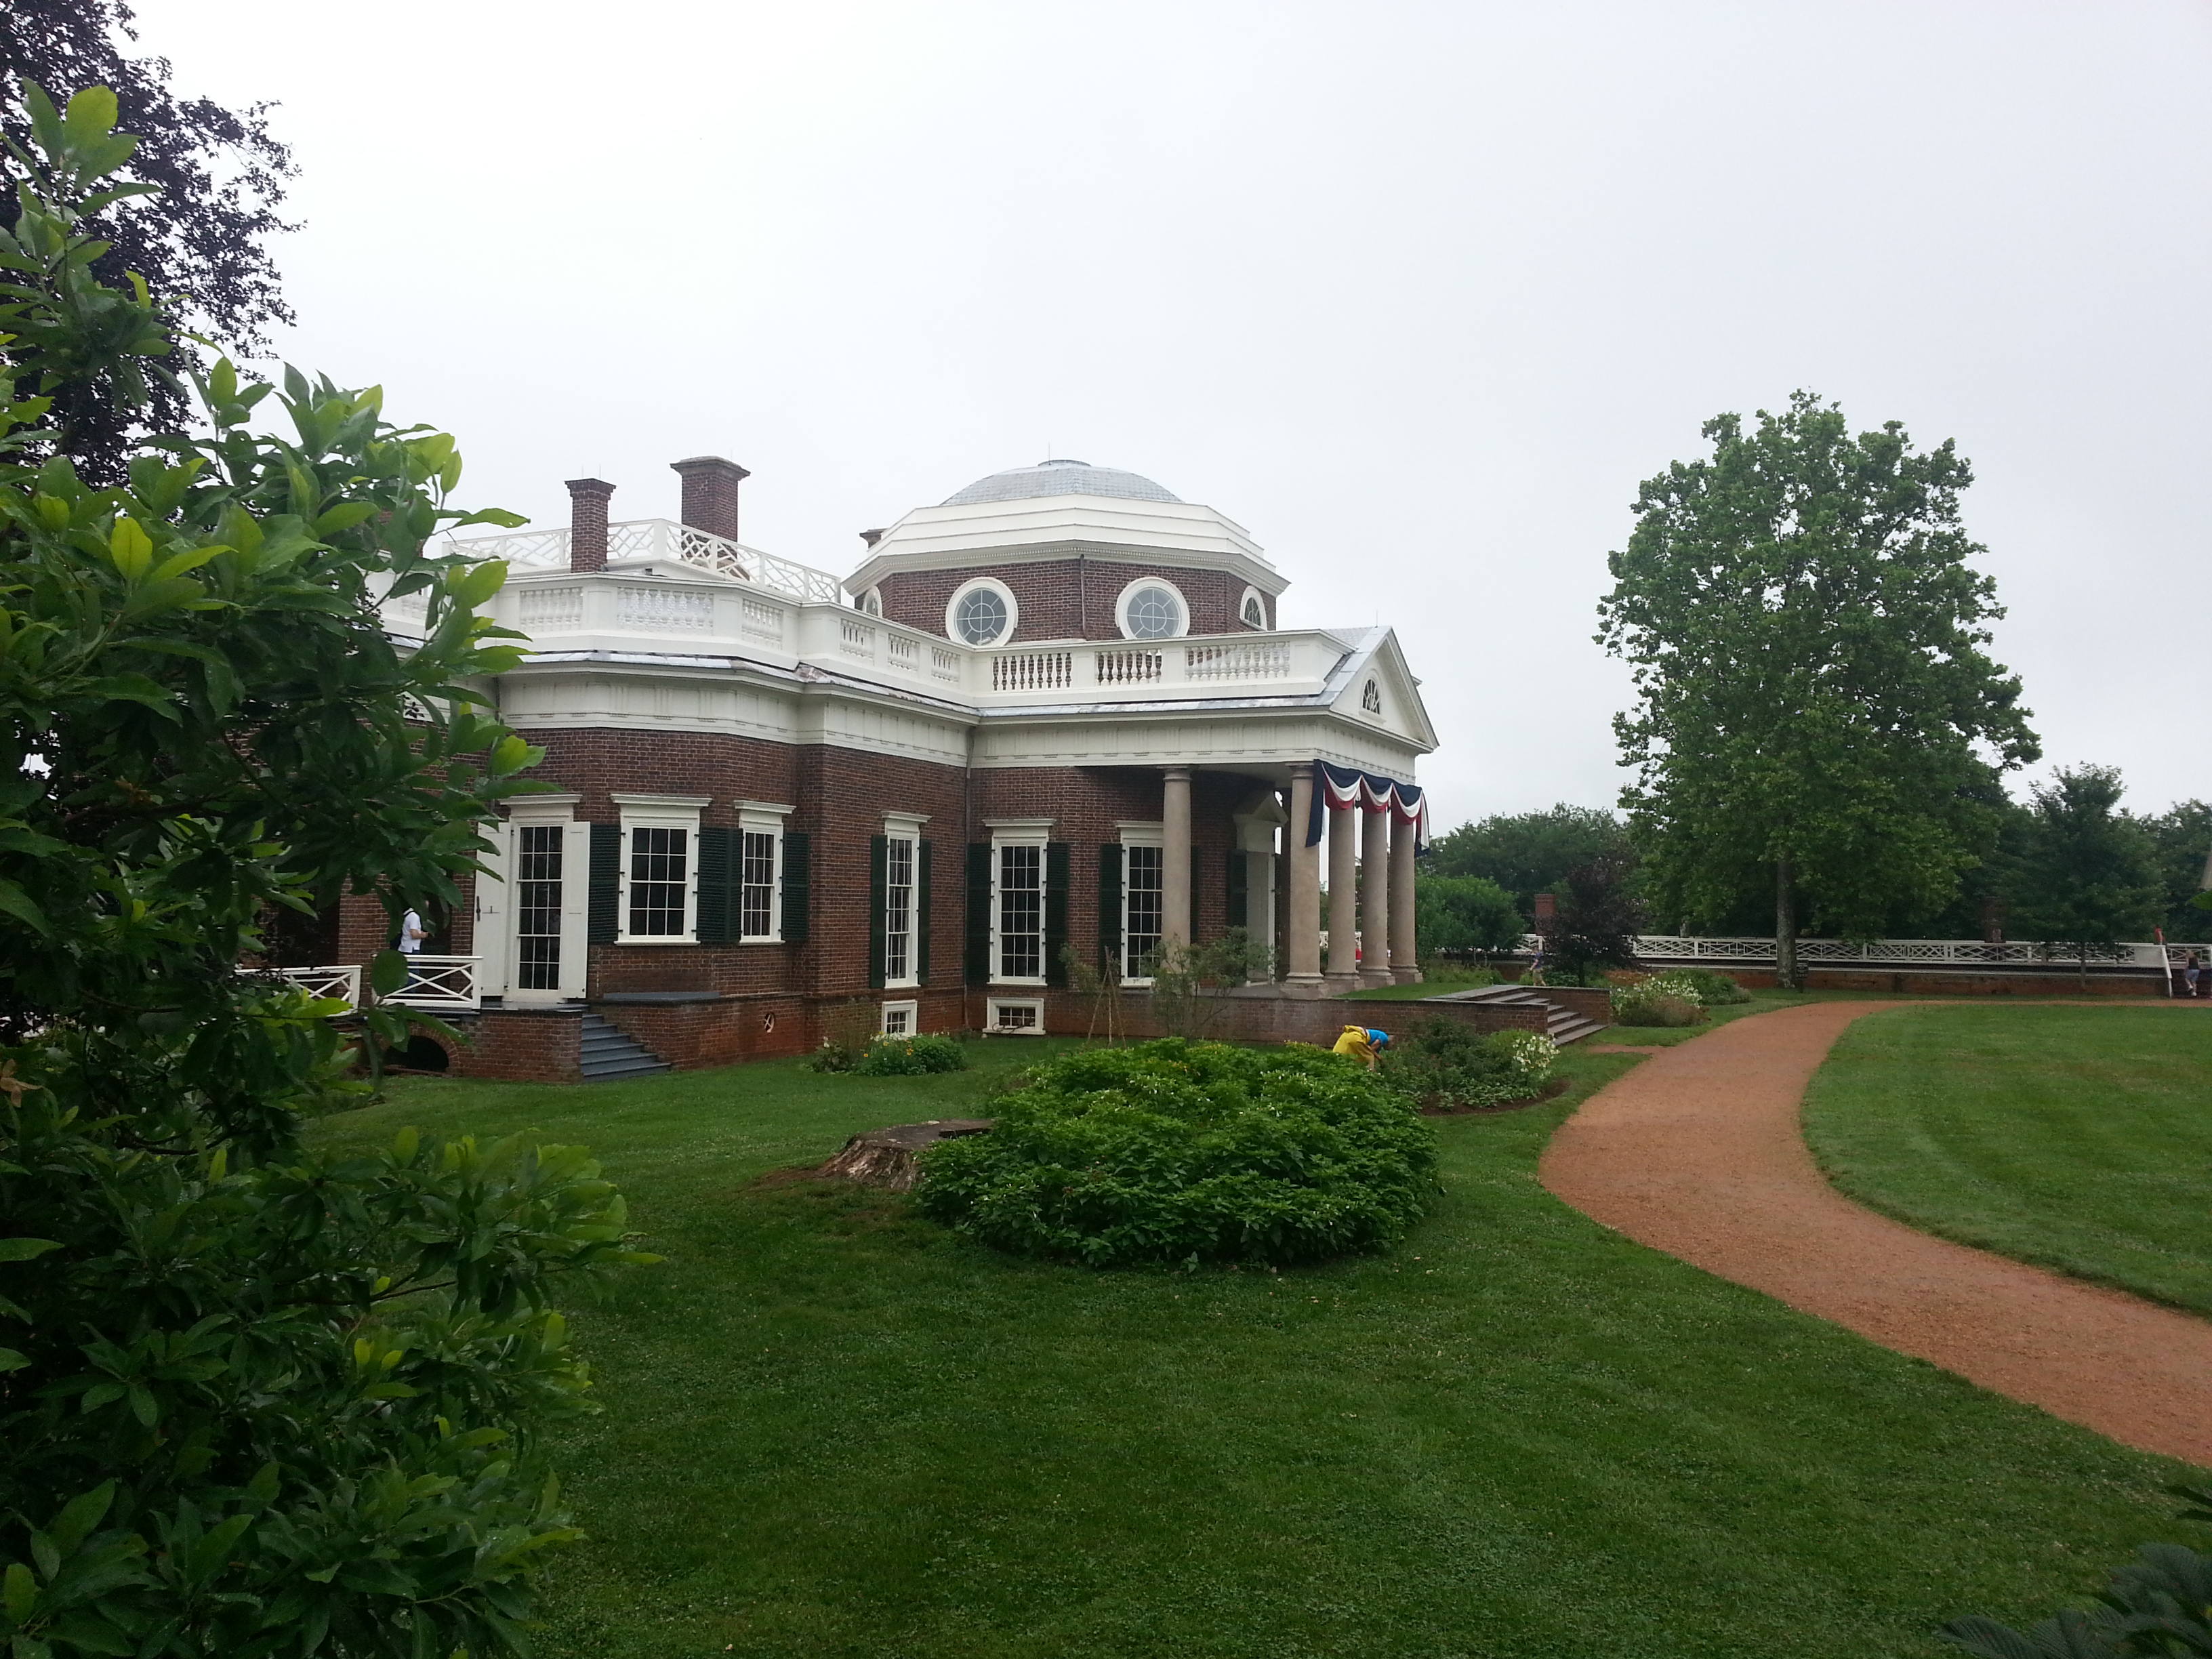 140. Thomas Jefferson’s Monticello